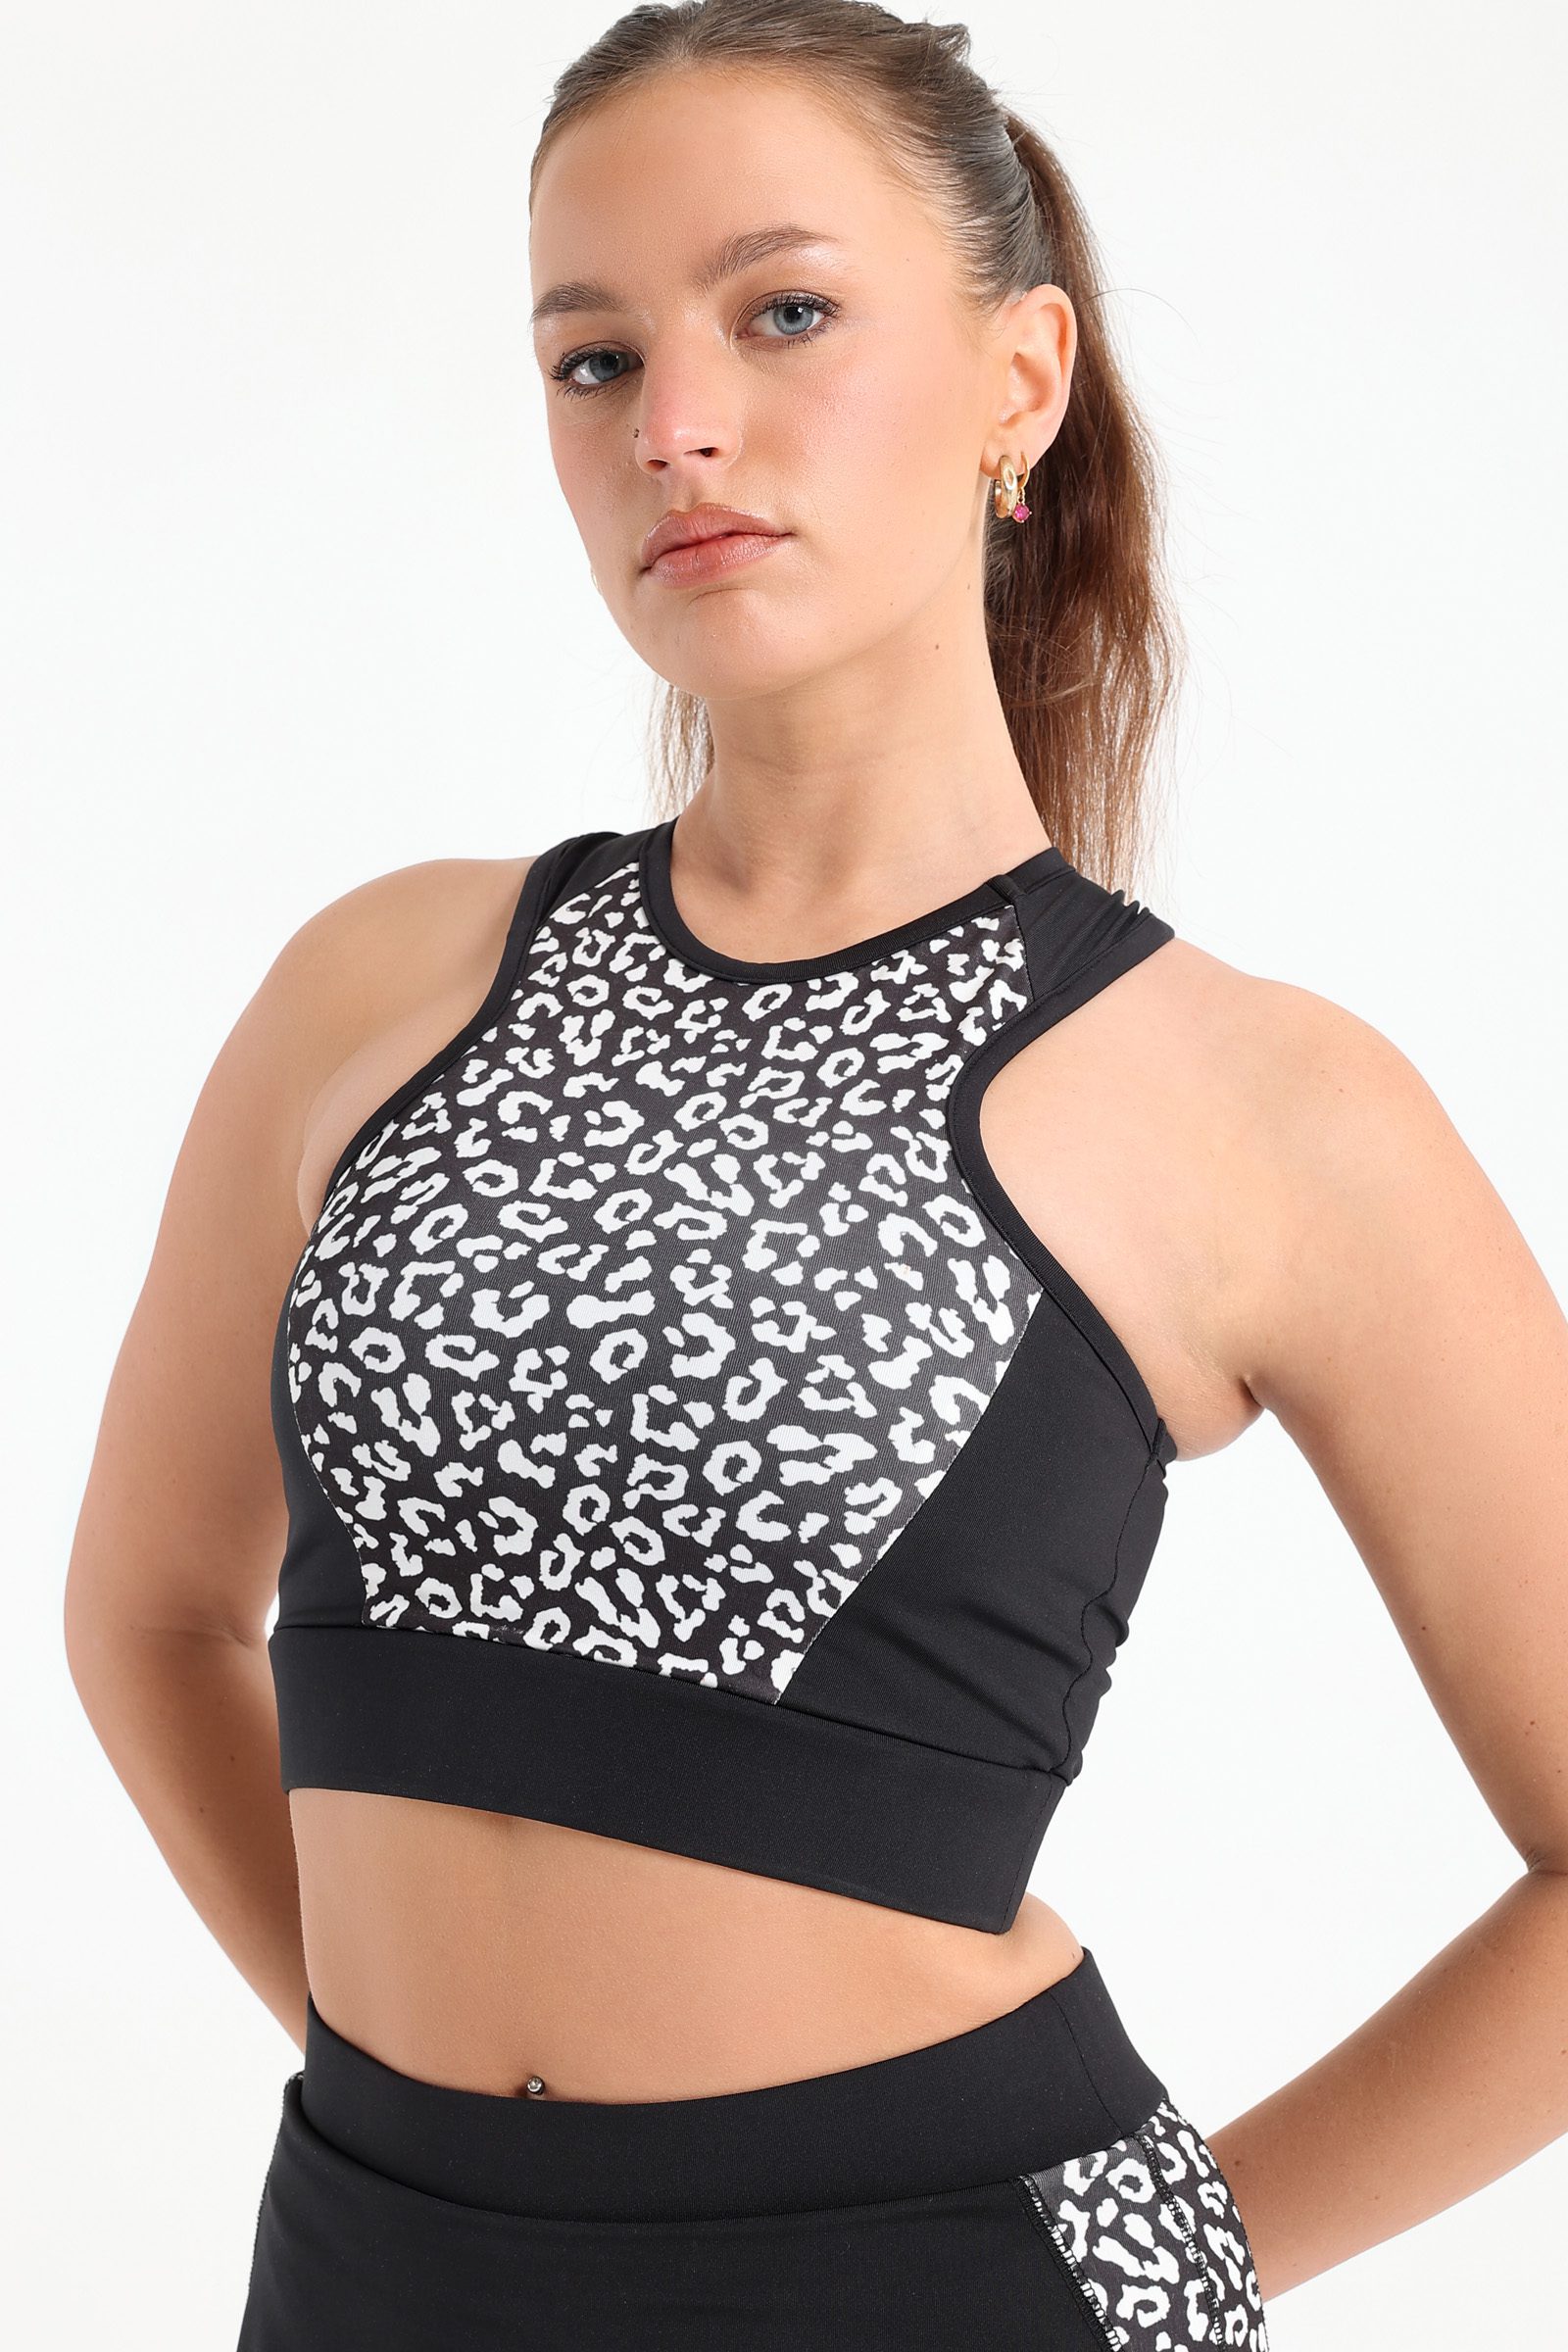 Power Medium Support Sports Bra - Black Reflective Leopard Print, Women's Sports  Bras